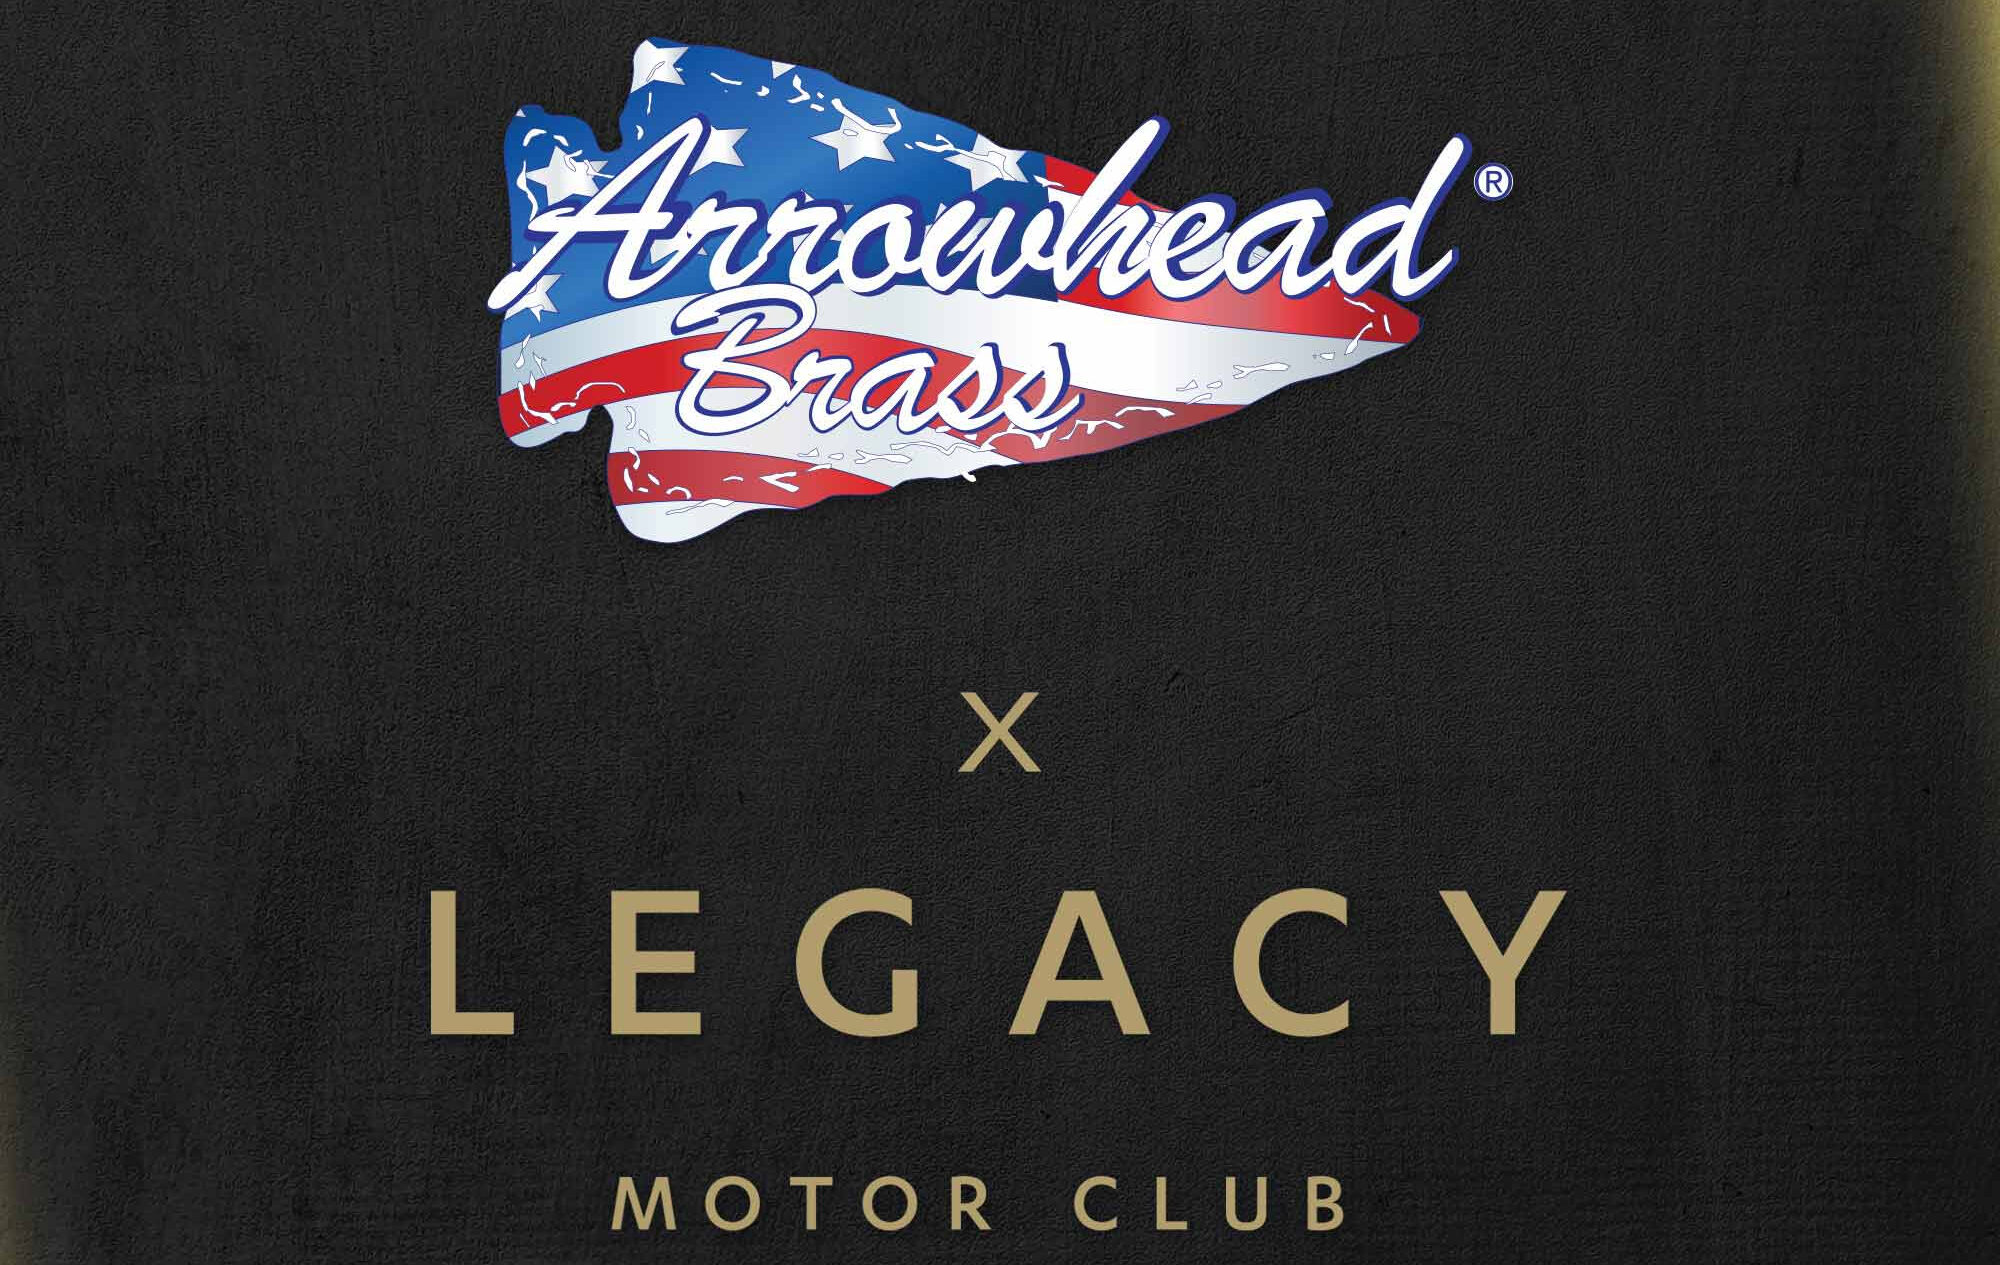 LEGACY MOTOR CLUB Announces Multi-Year Partnership with Arrowhead Brass